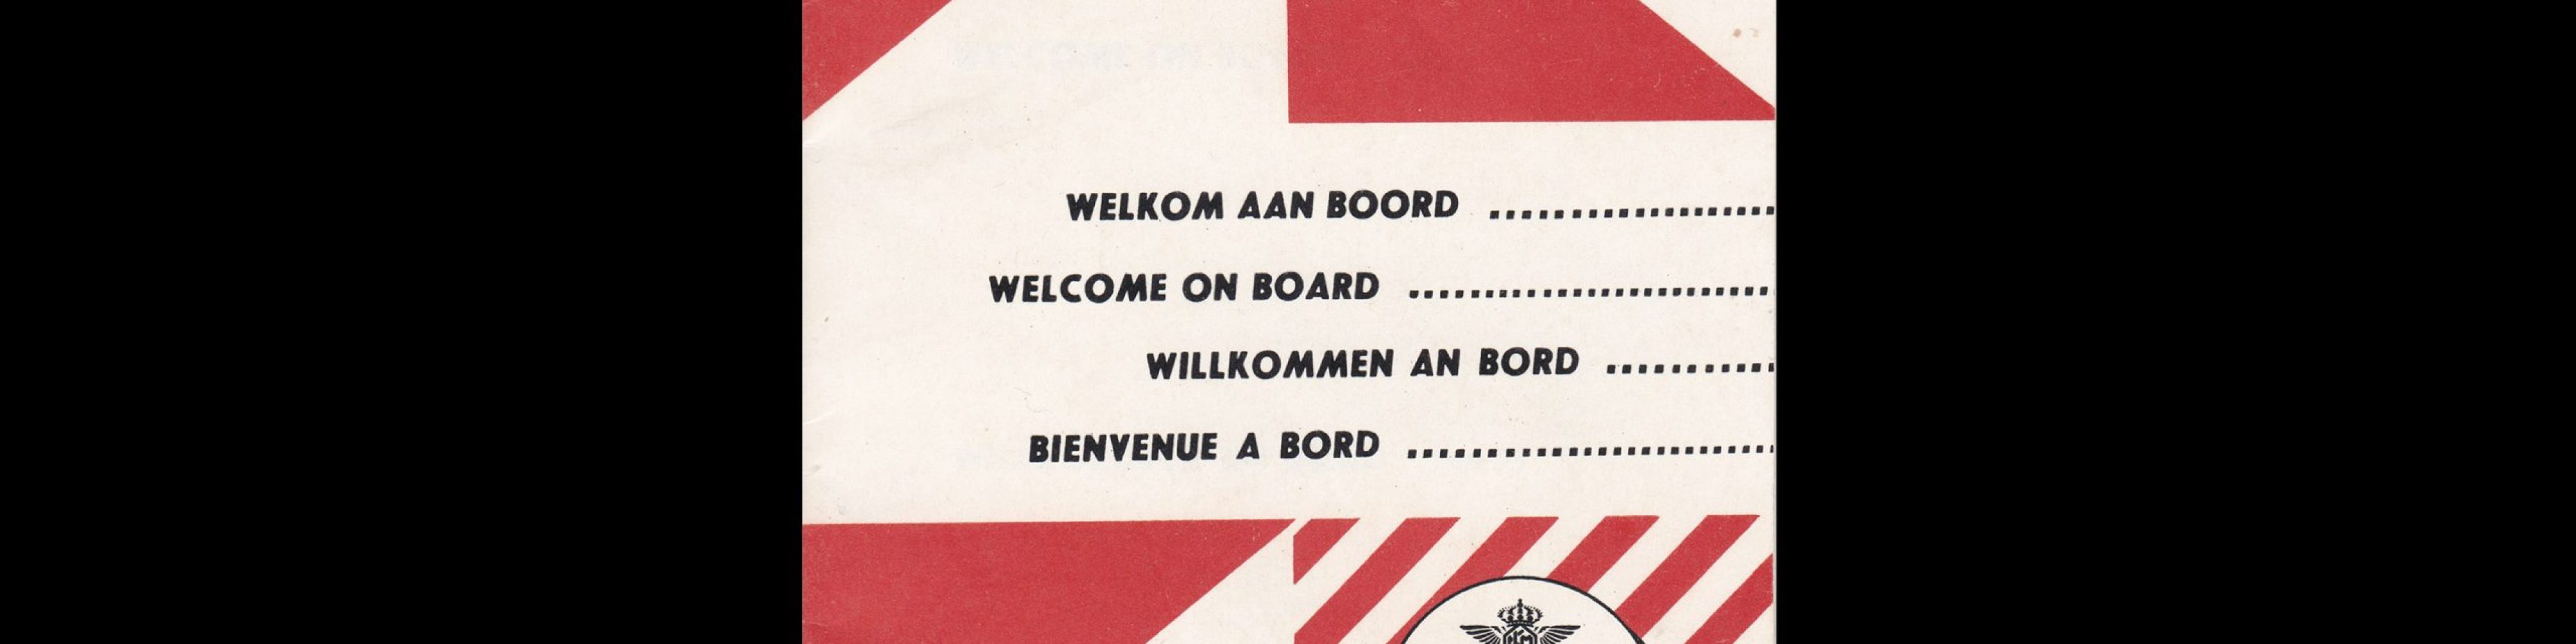 KLM On Board Information Brochure, 1958. Designed by Otto Treumann